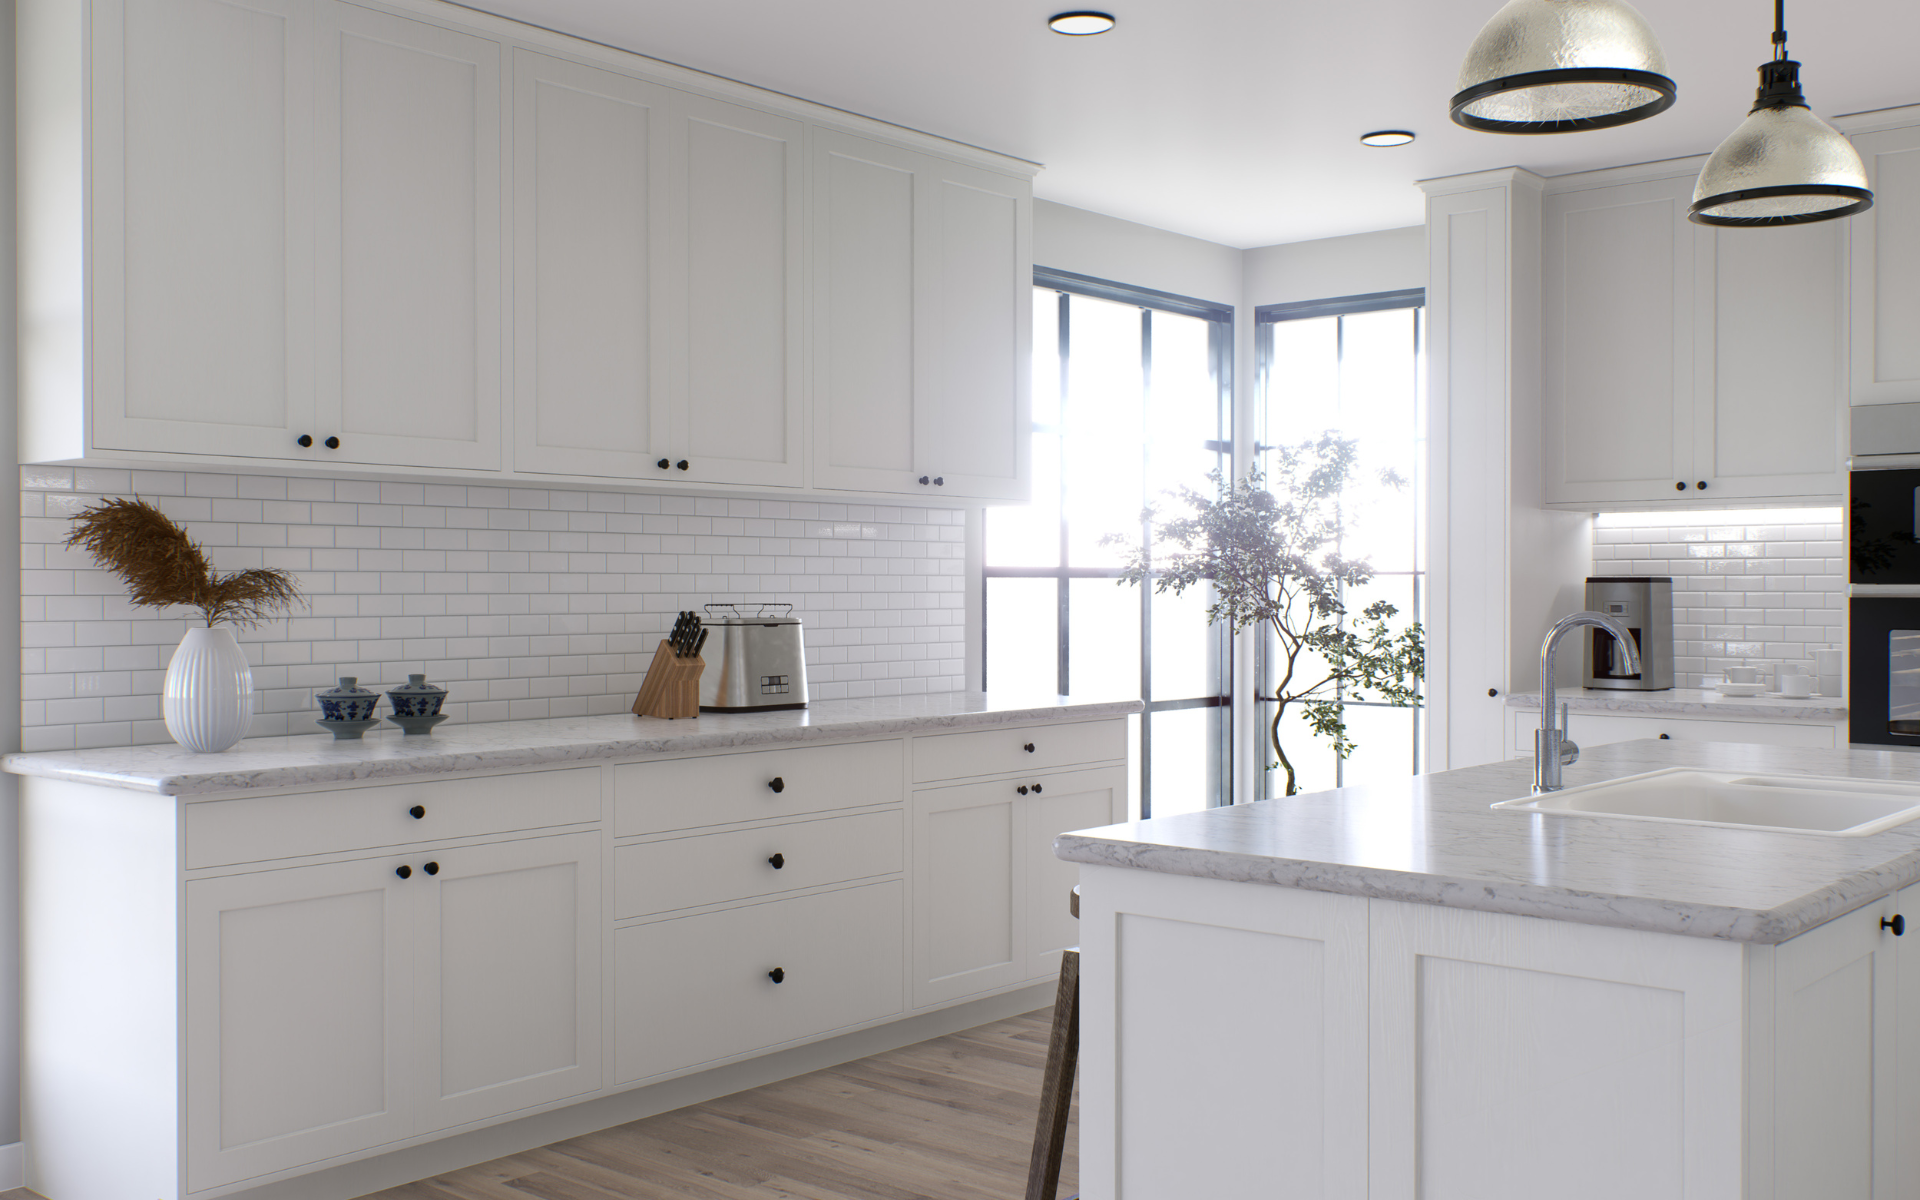 Elegant kitchen with white shaker cabinets, and white backsplash